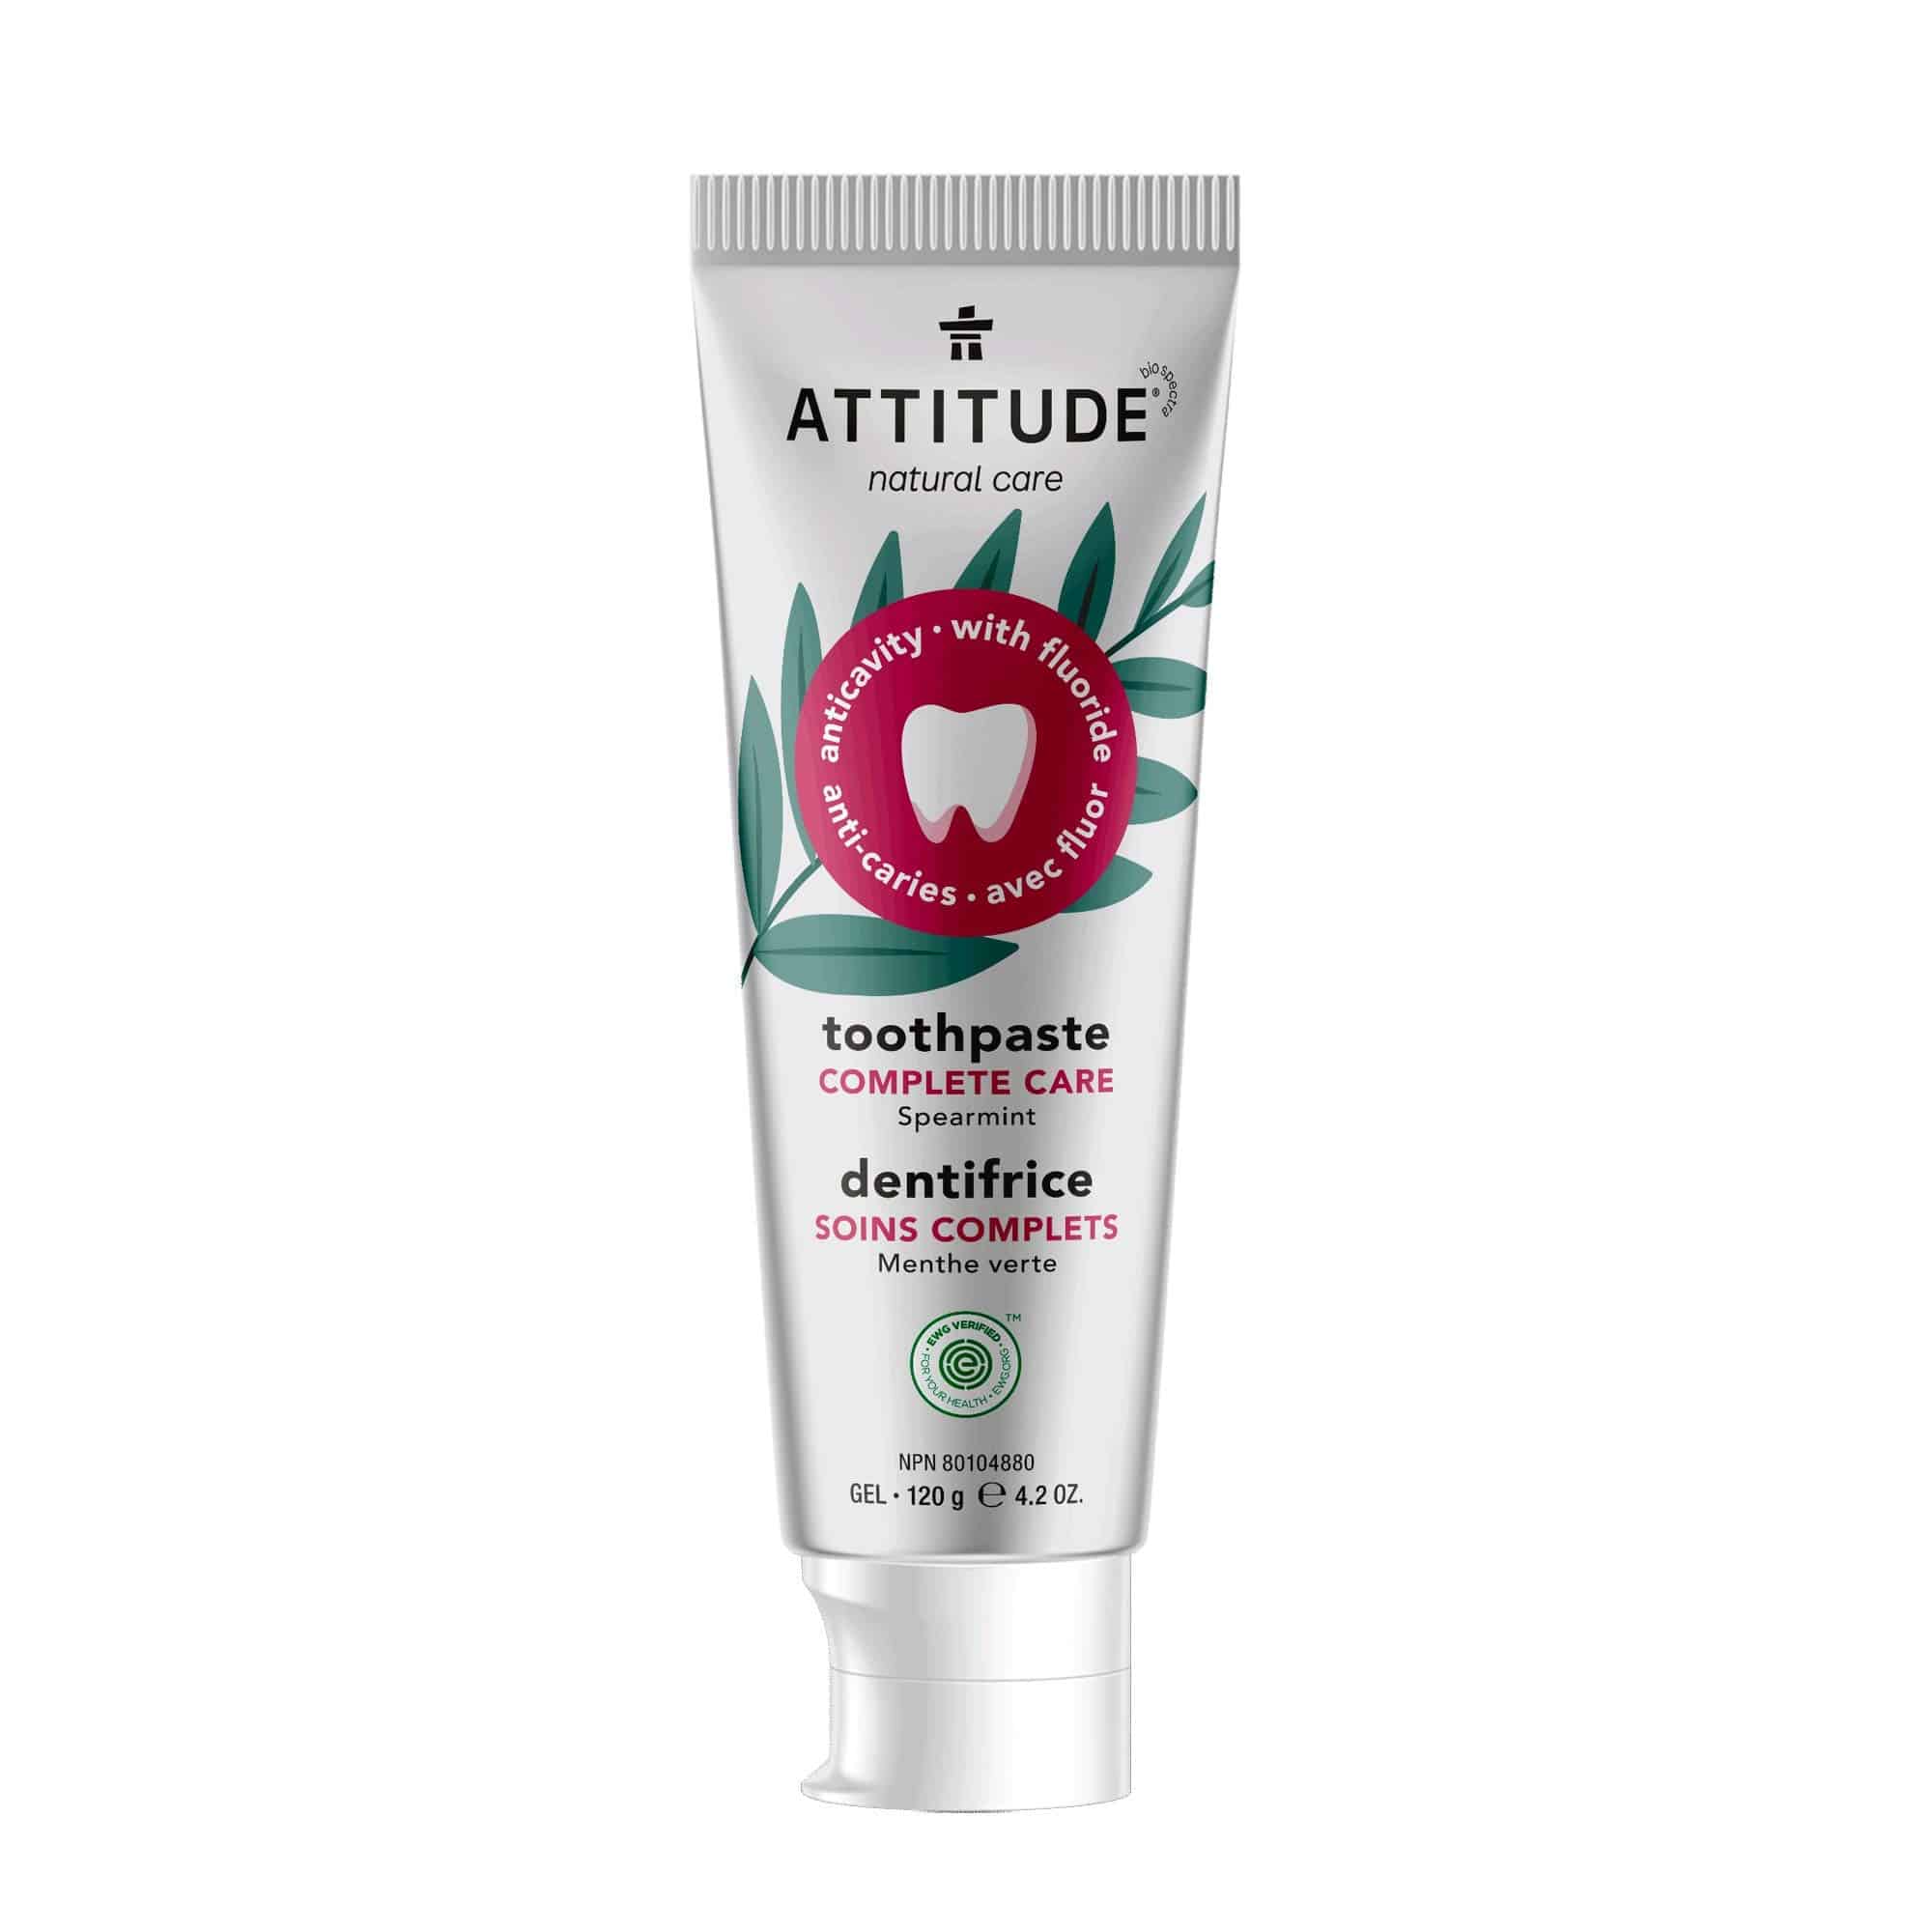 Image of Attitude toothpaste. | Gimme The Good Stuff